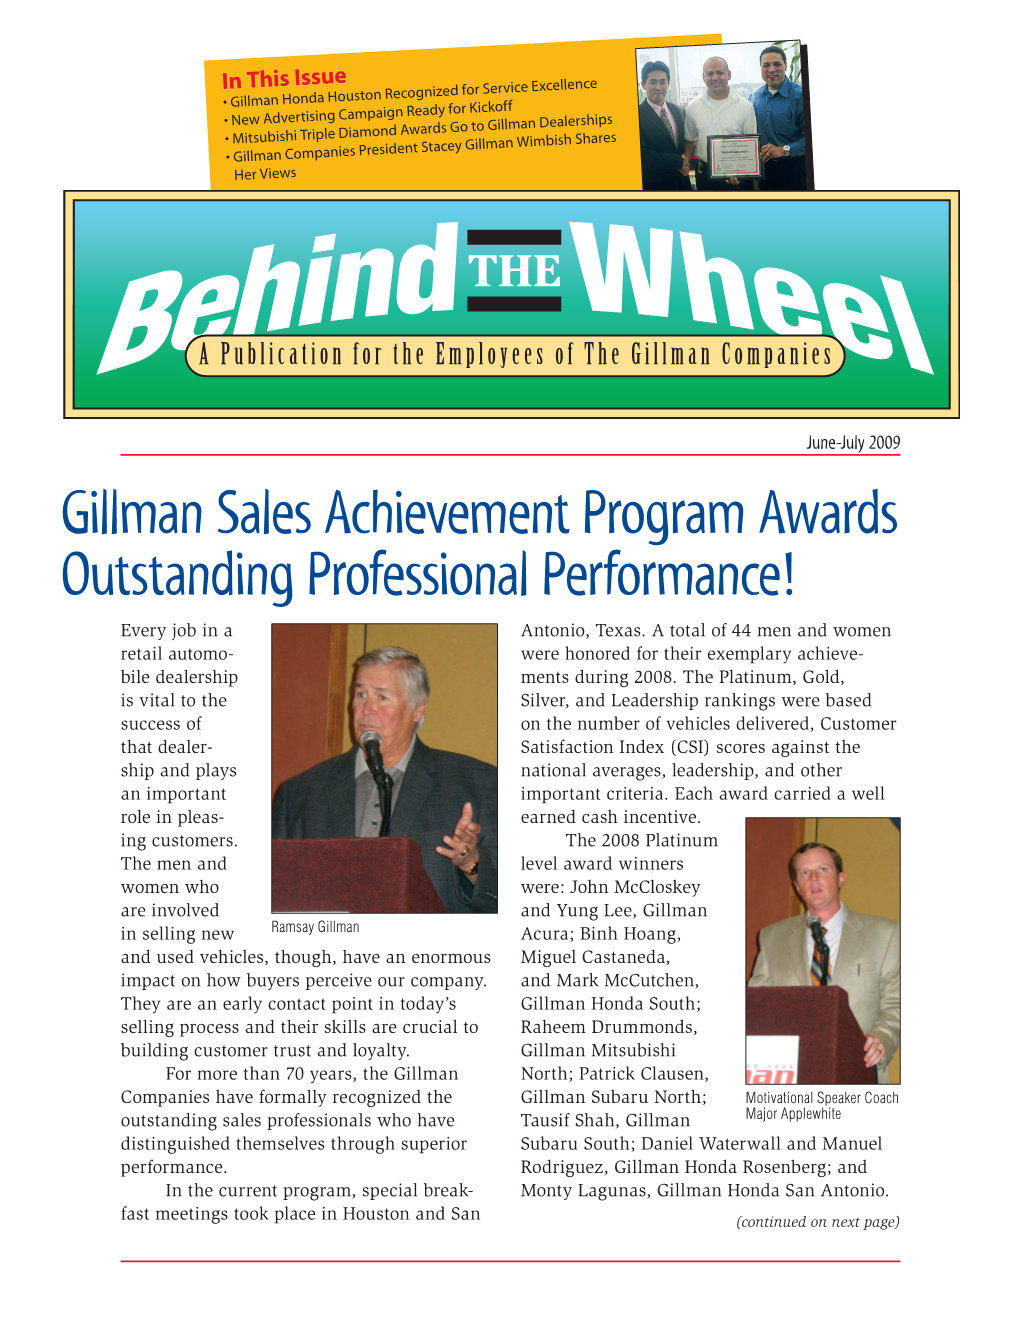 Gillman Sales Achievement Program Awards Outstanding Professional Performance! Every Job in a Antonio, Texas